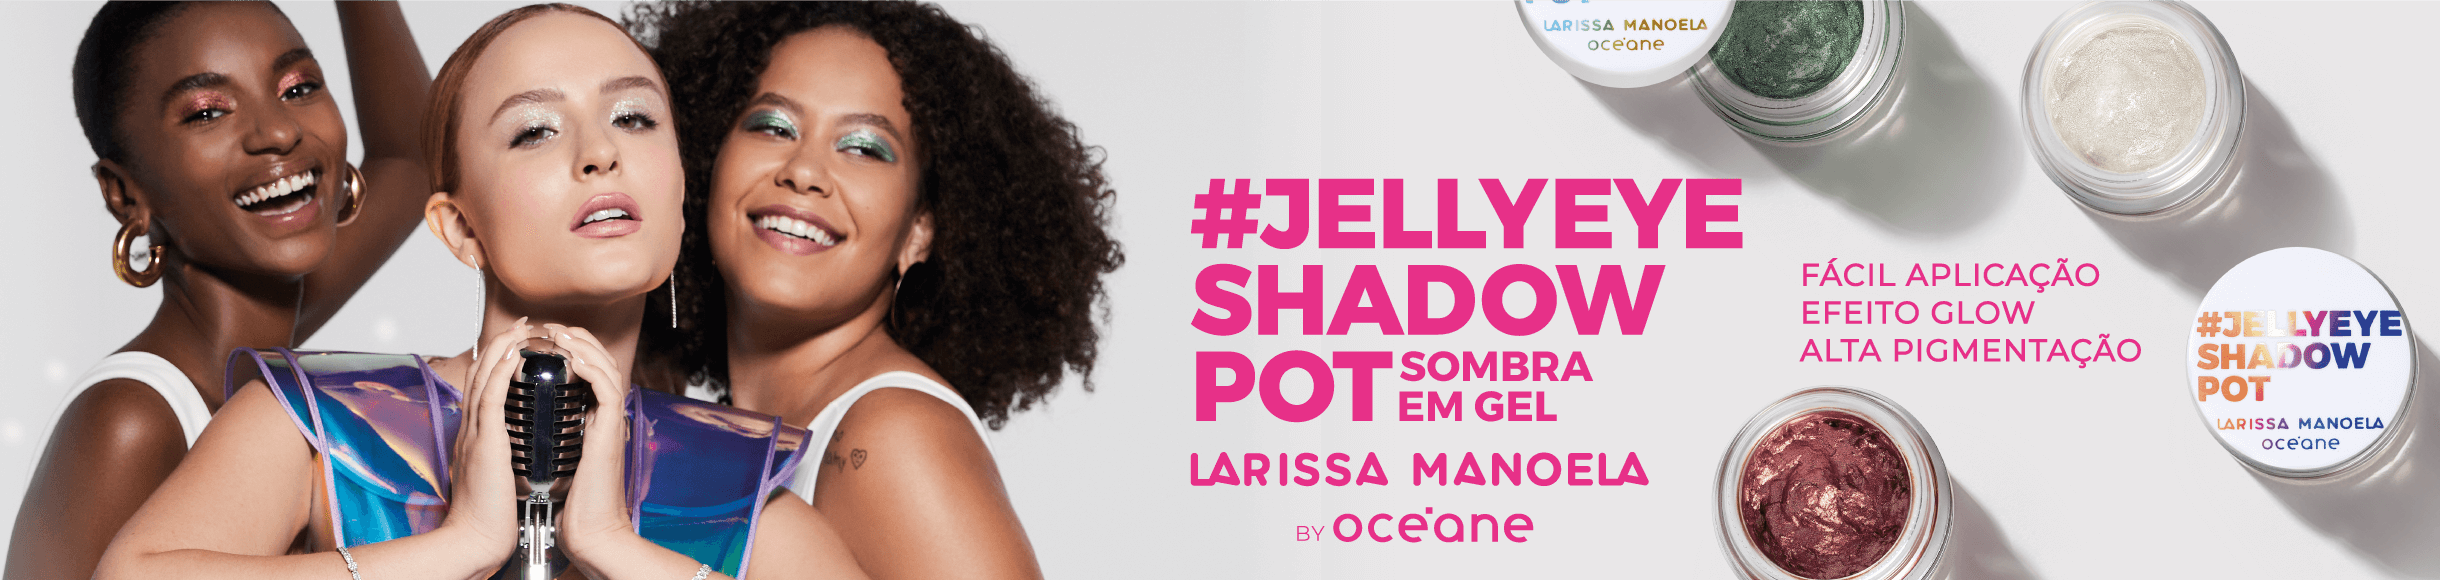 Banner Larissa Manoela Jelly Eyeshadow